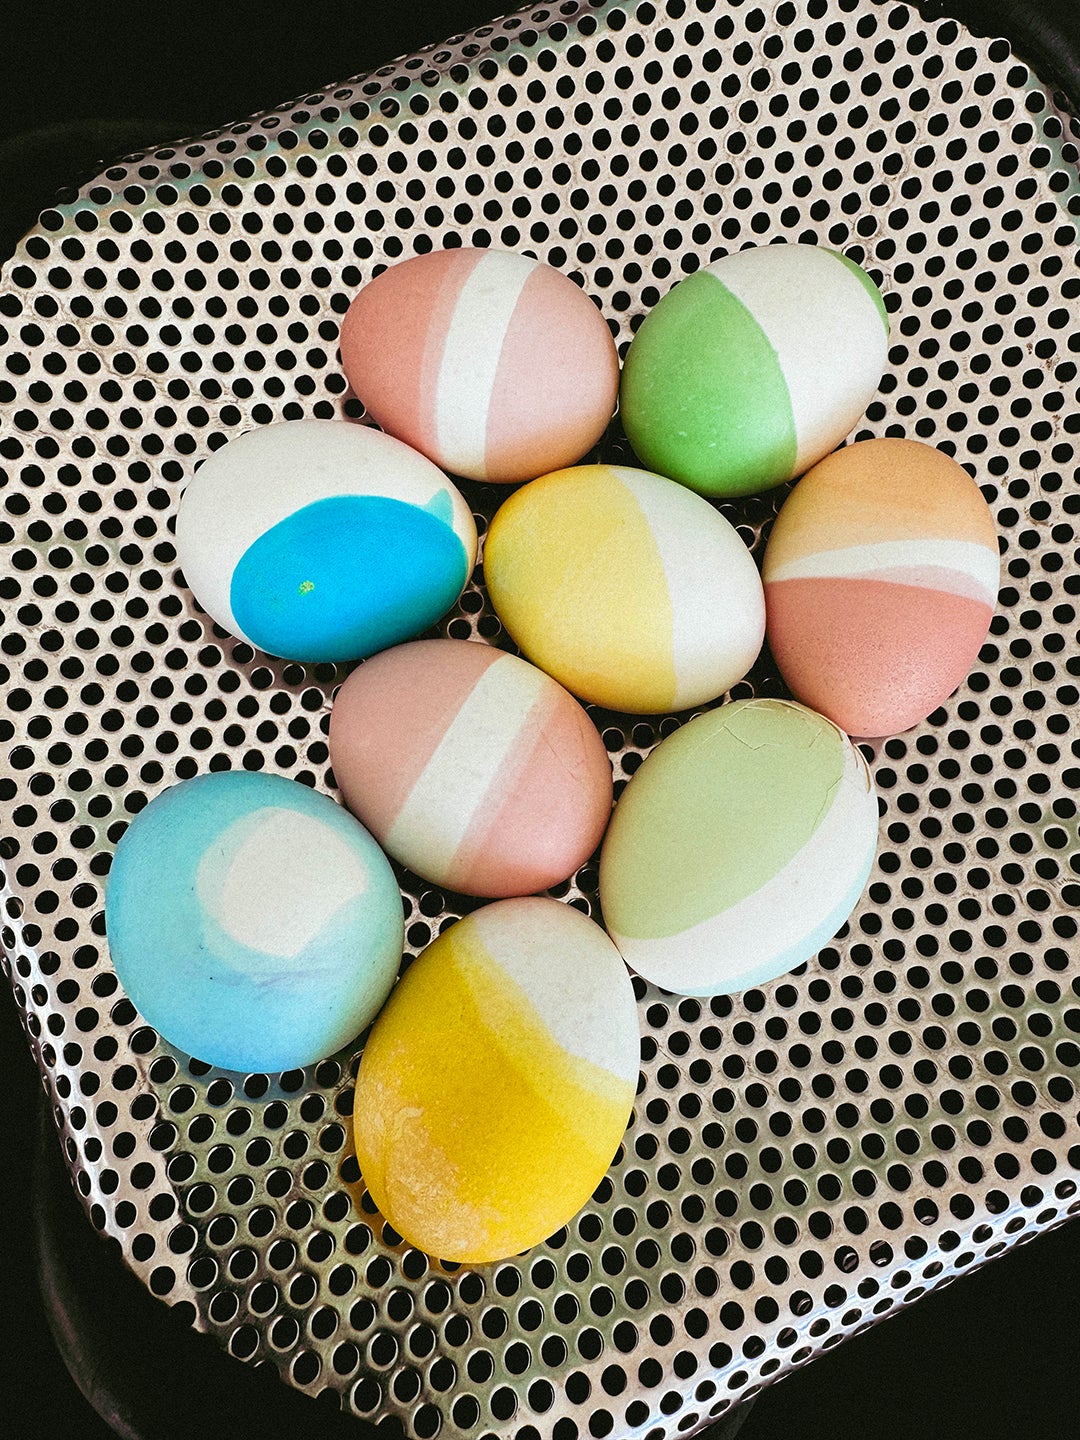 Easter eggs half-dipped